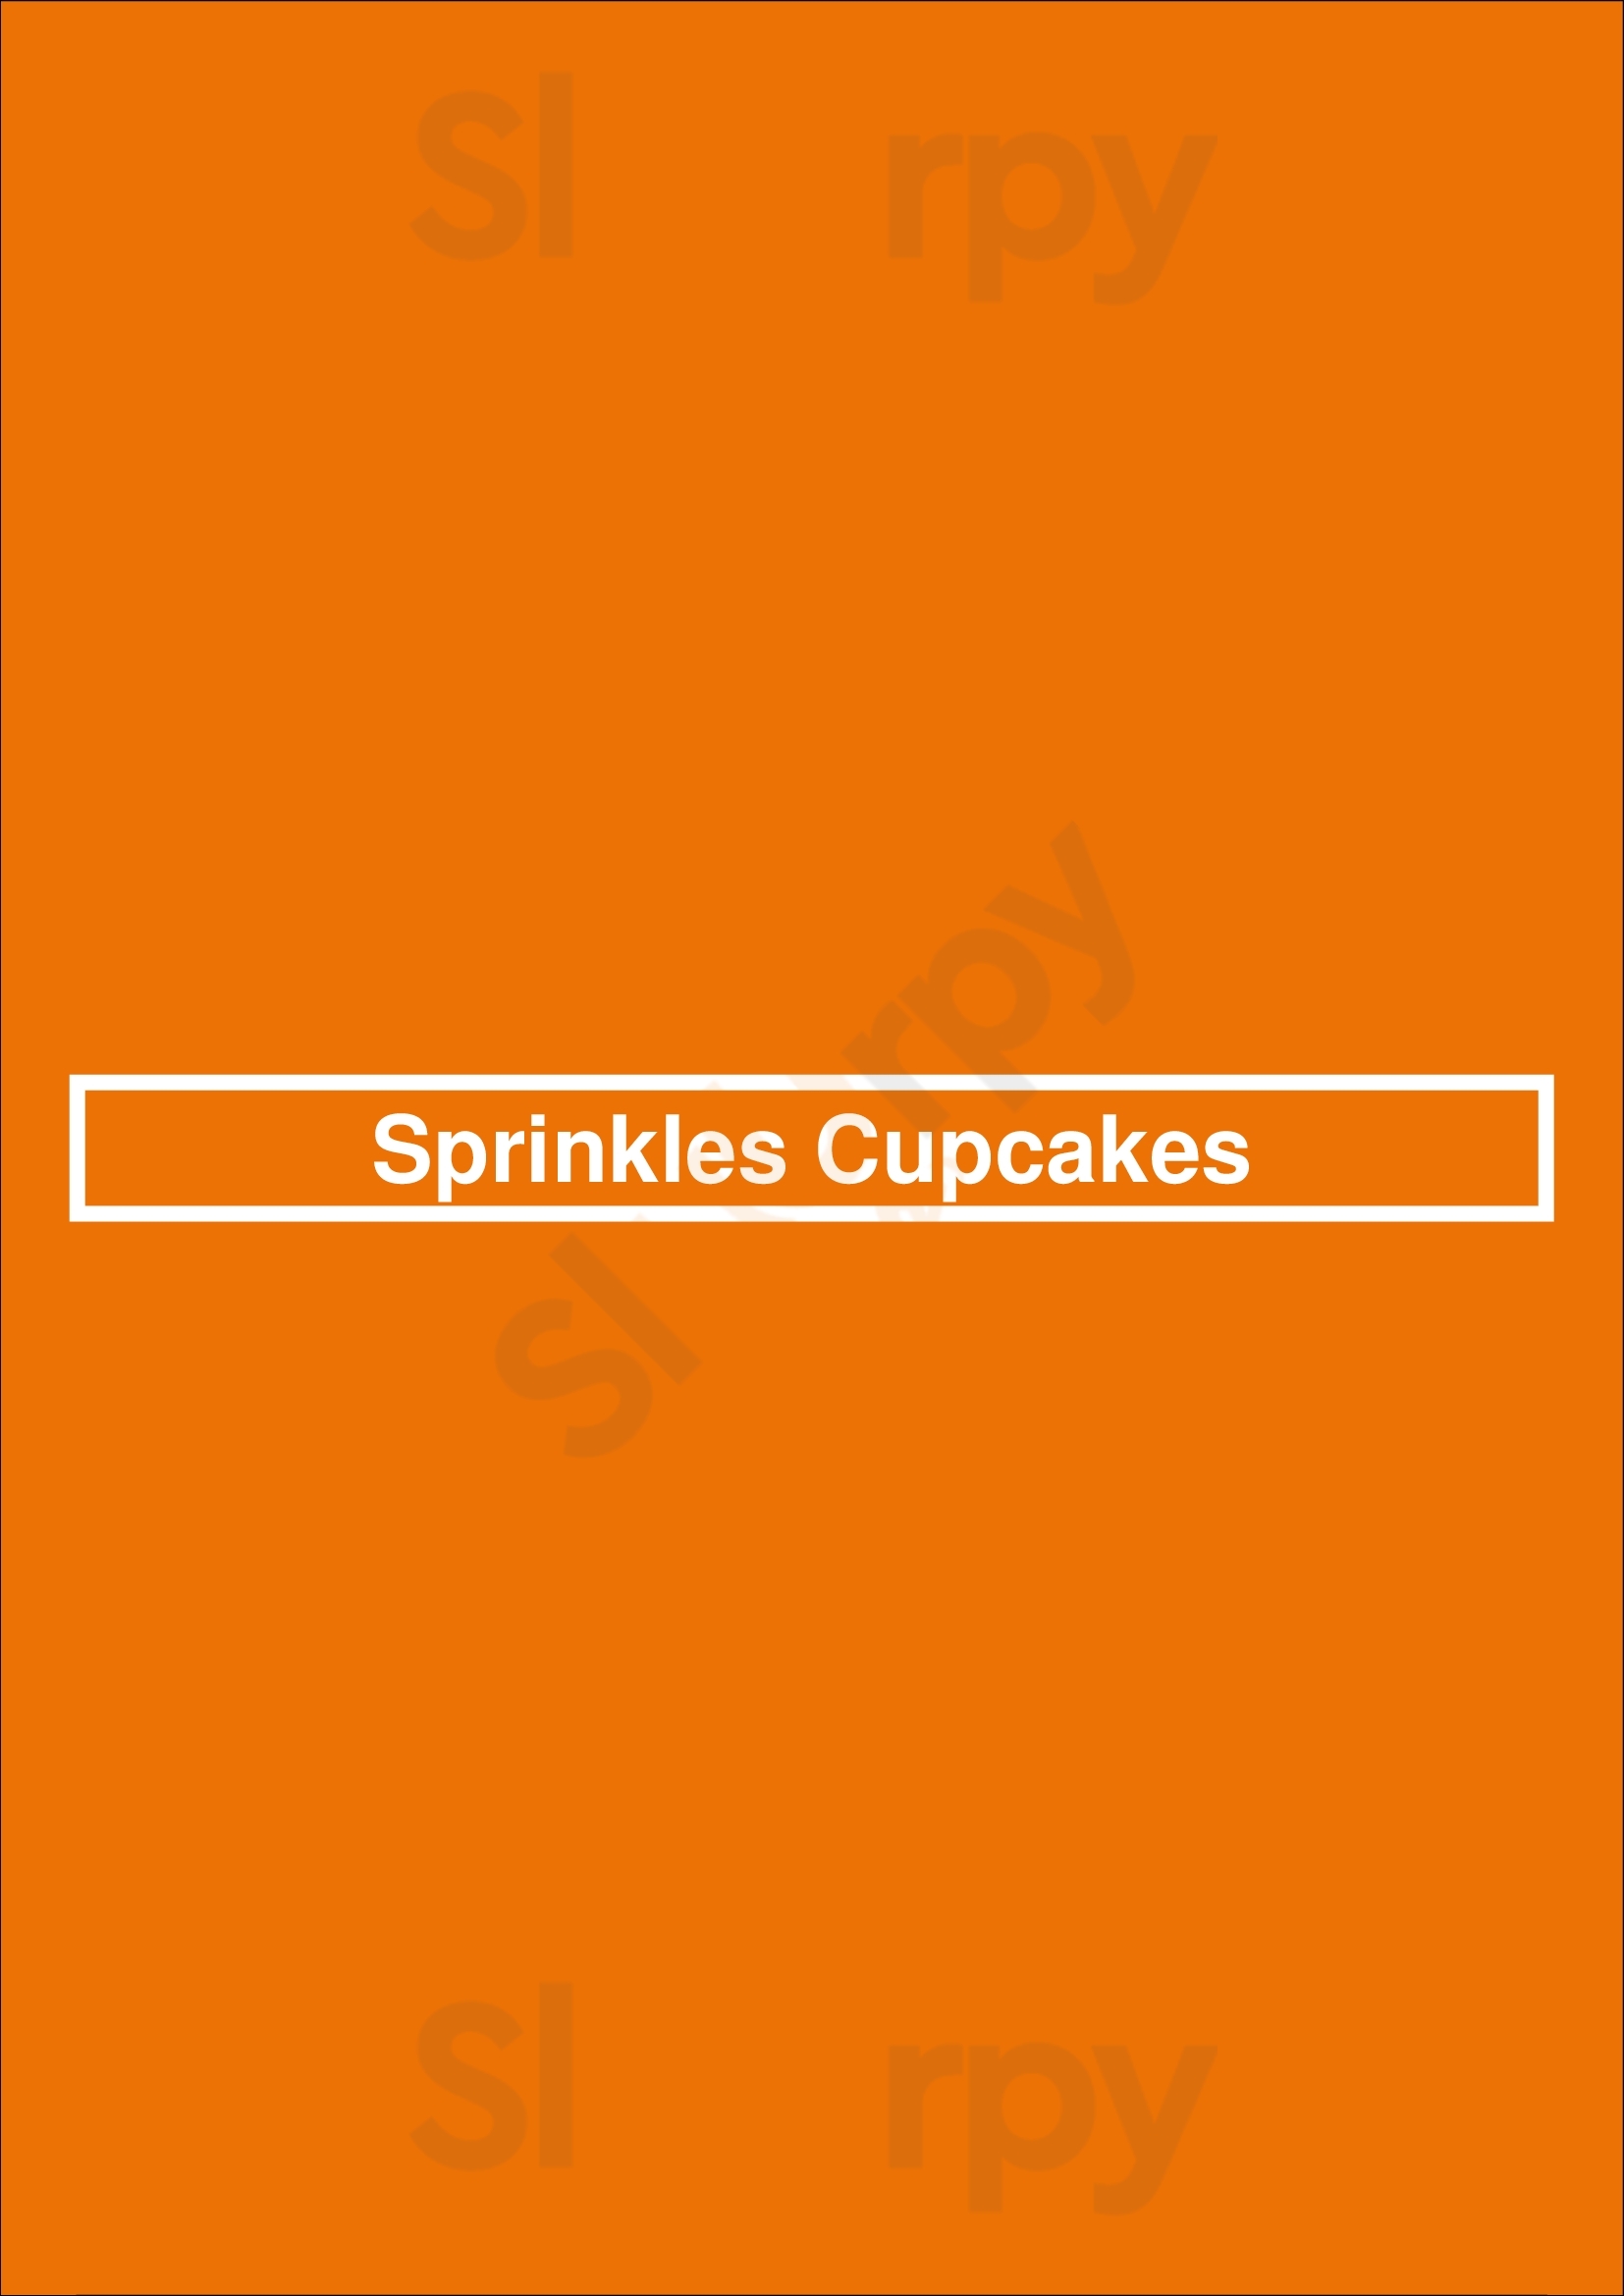 Sprinkles Orlando Menu - 1